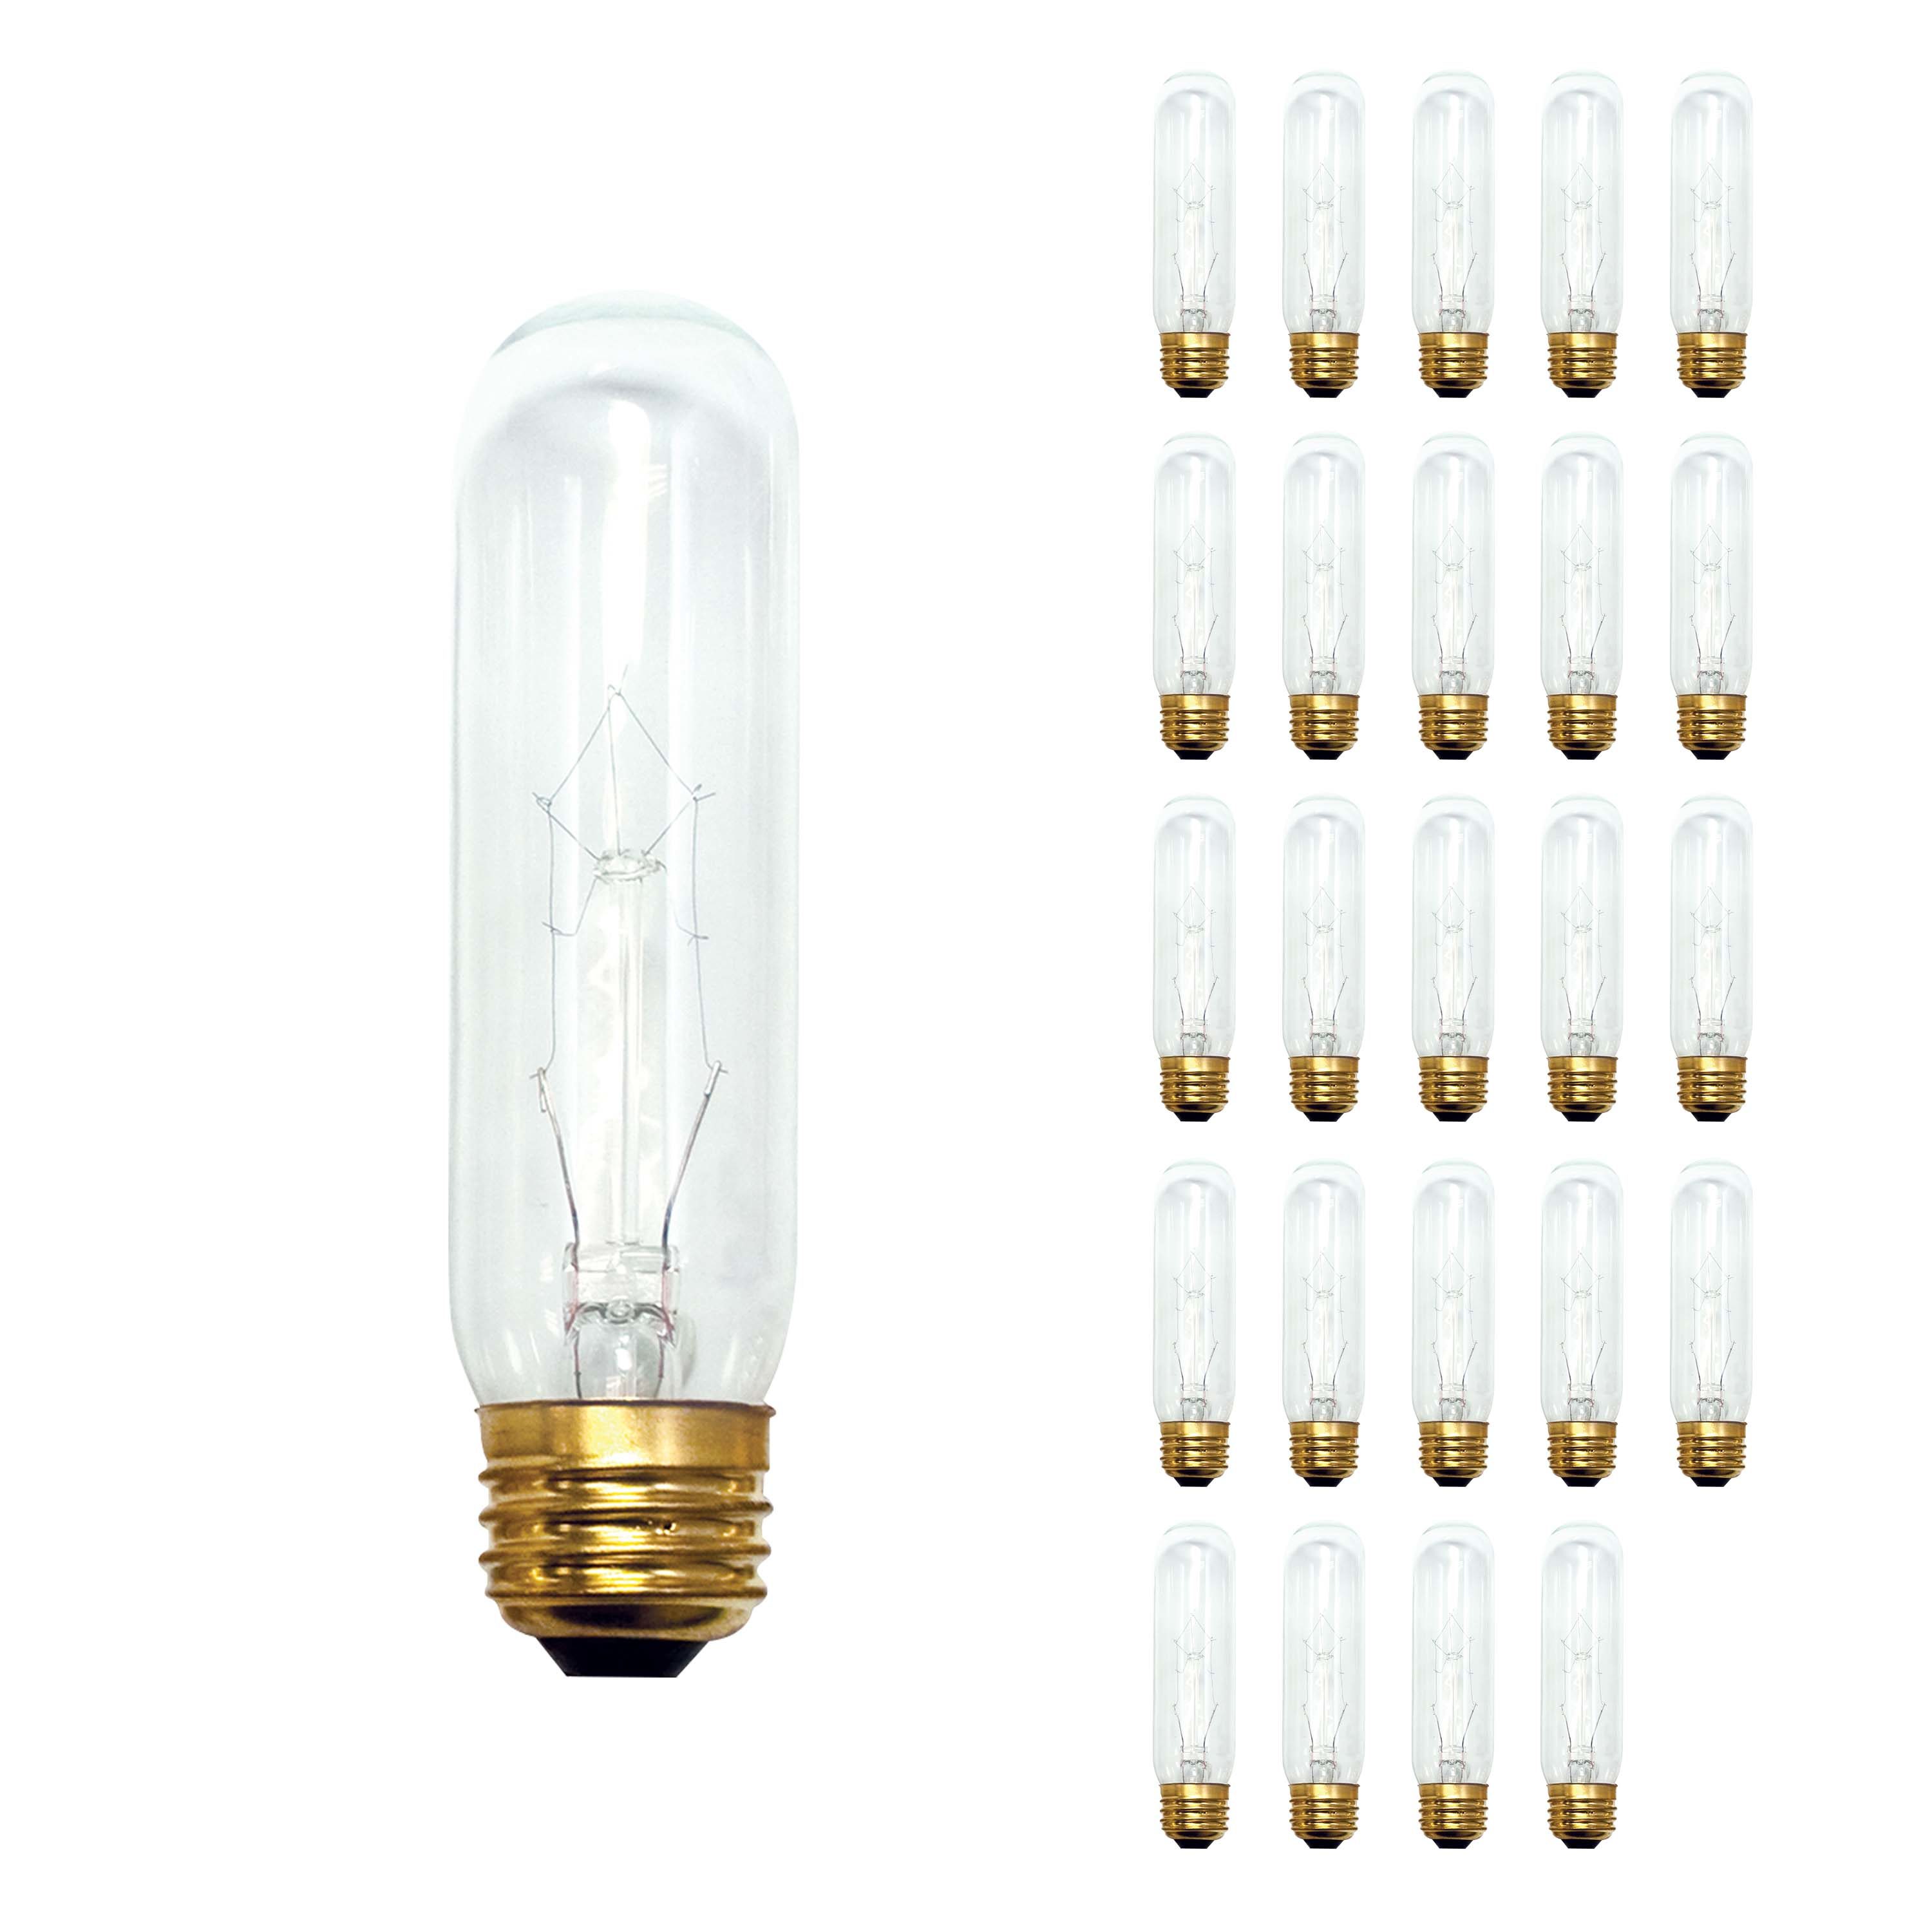 Sylvania T10 Tubular Clear Incandescent Light Bulb 15W Warm White E26 2 Pack 